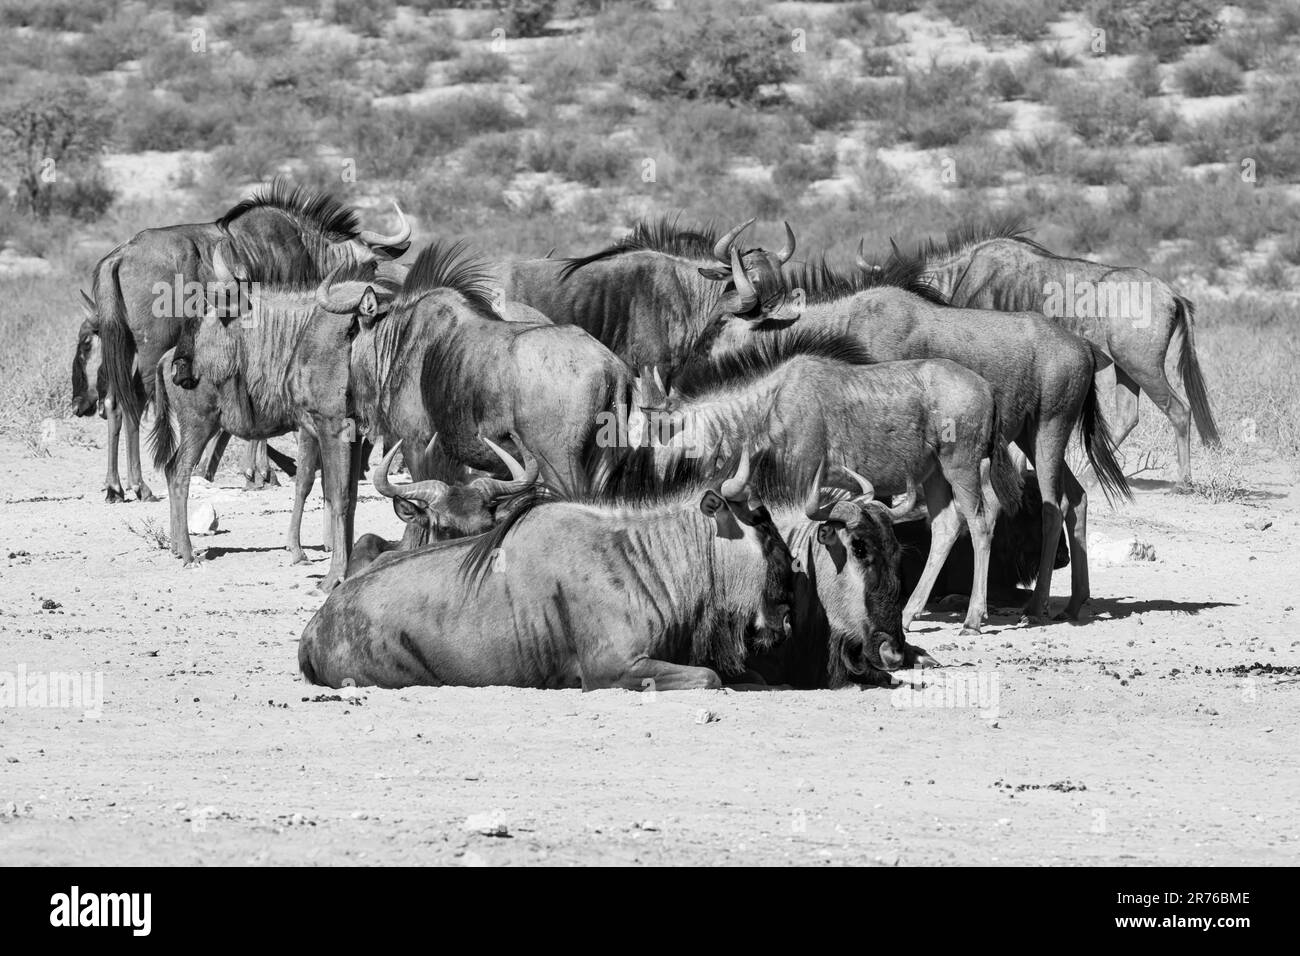 Blue Wildebeest antelope in Southern African Kalahari savannah Stock Photo